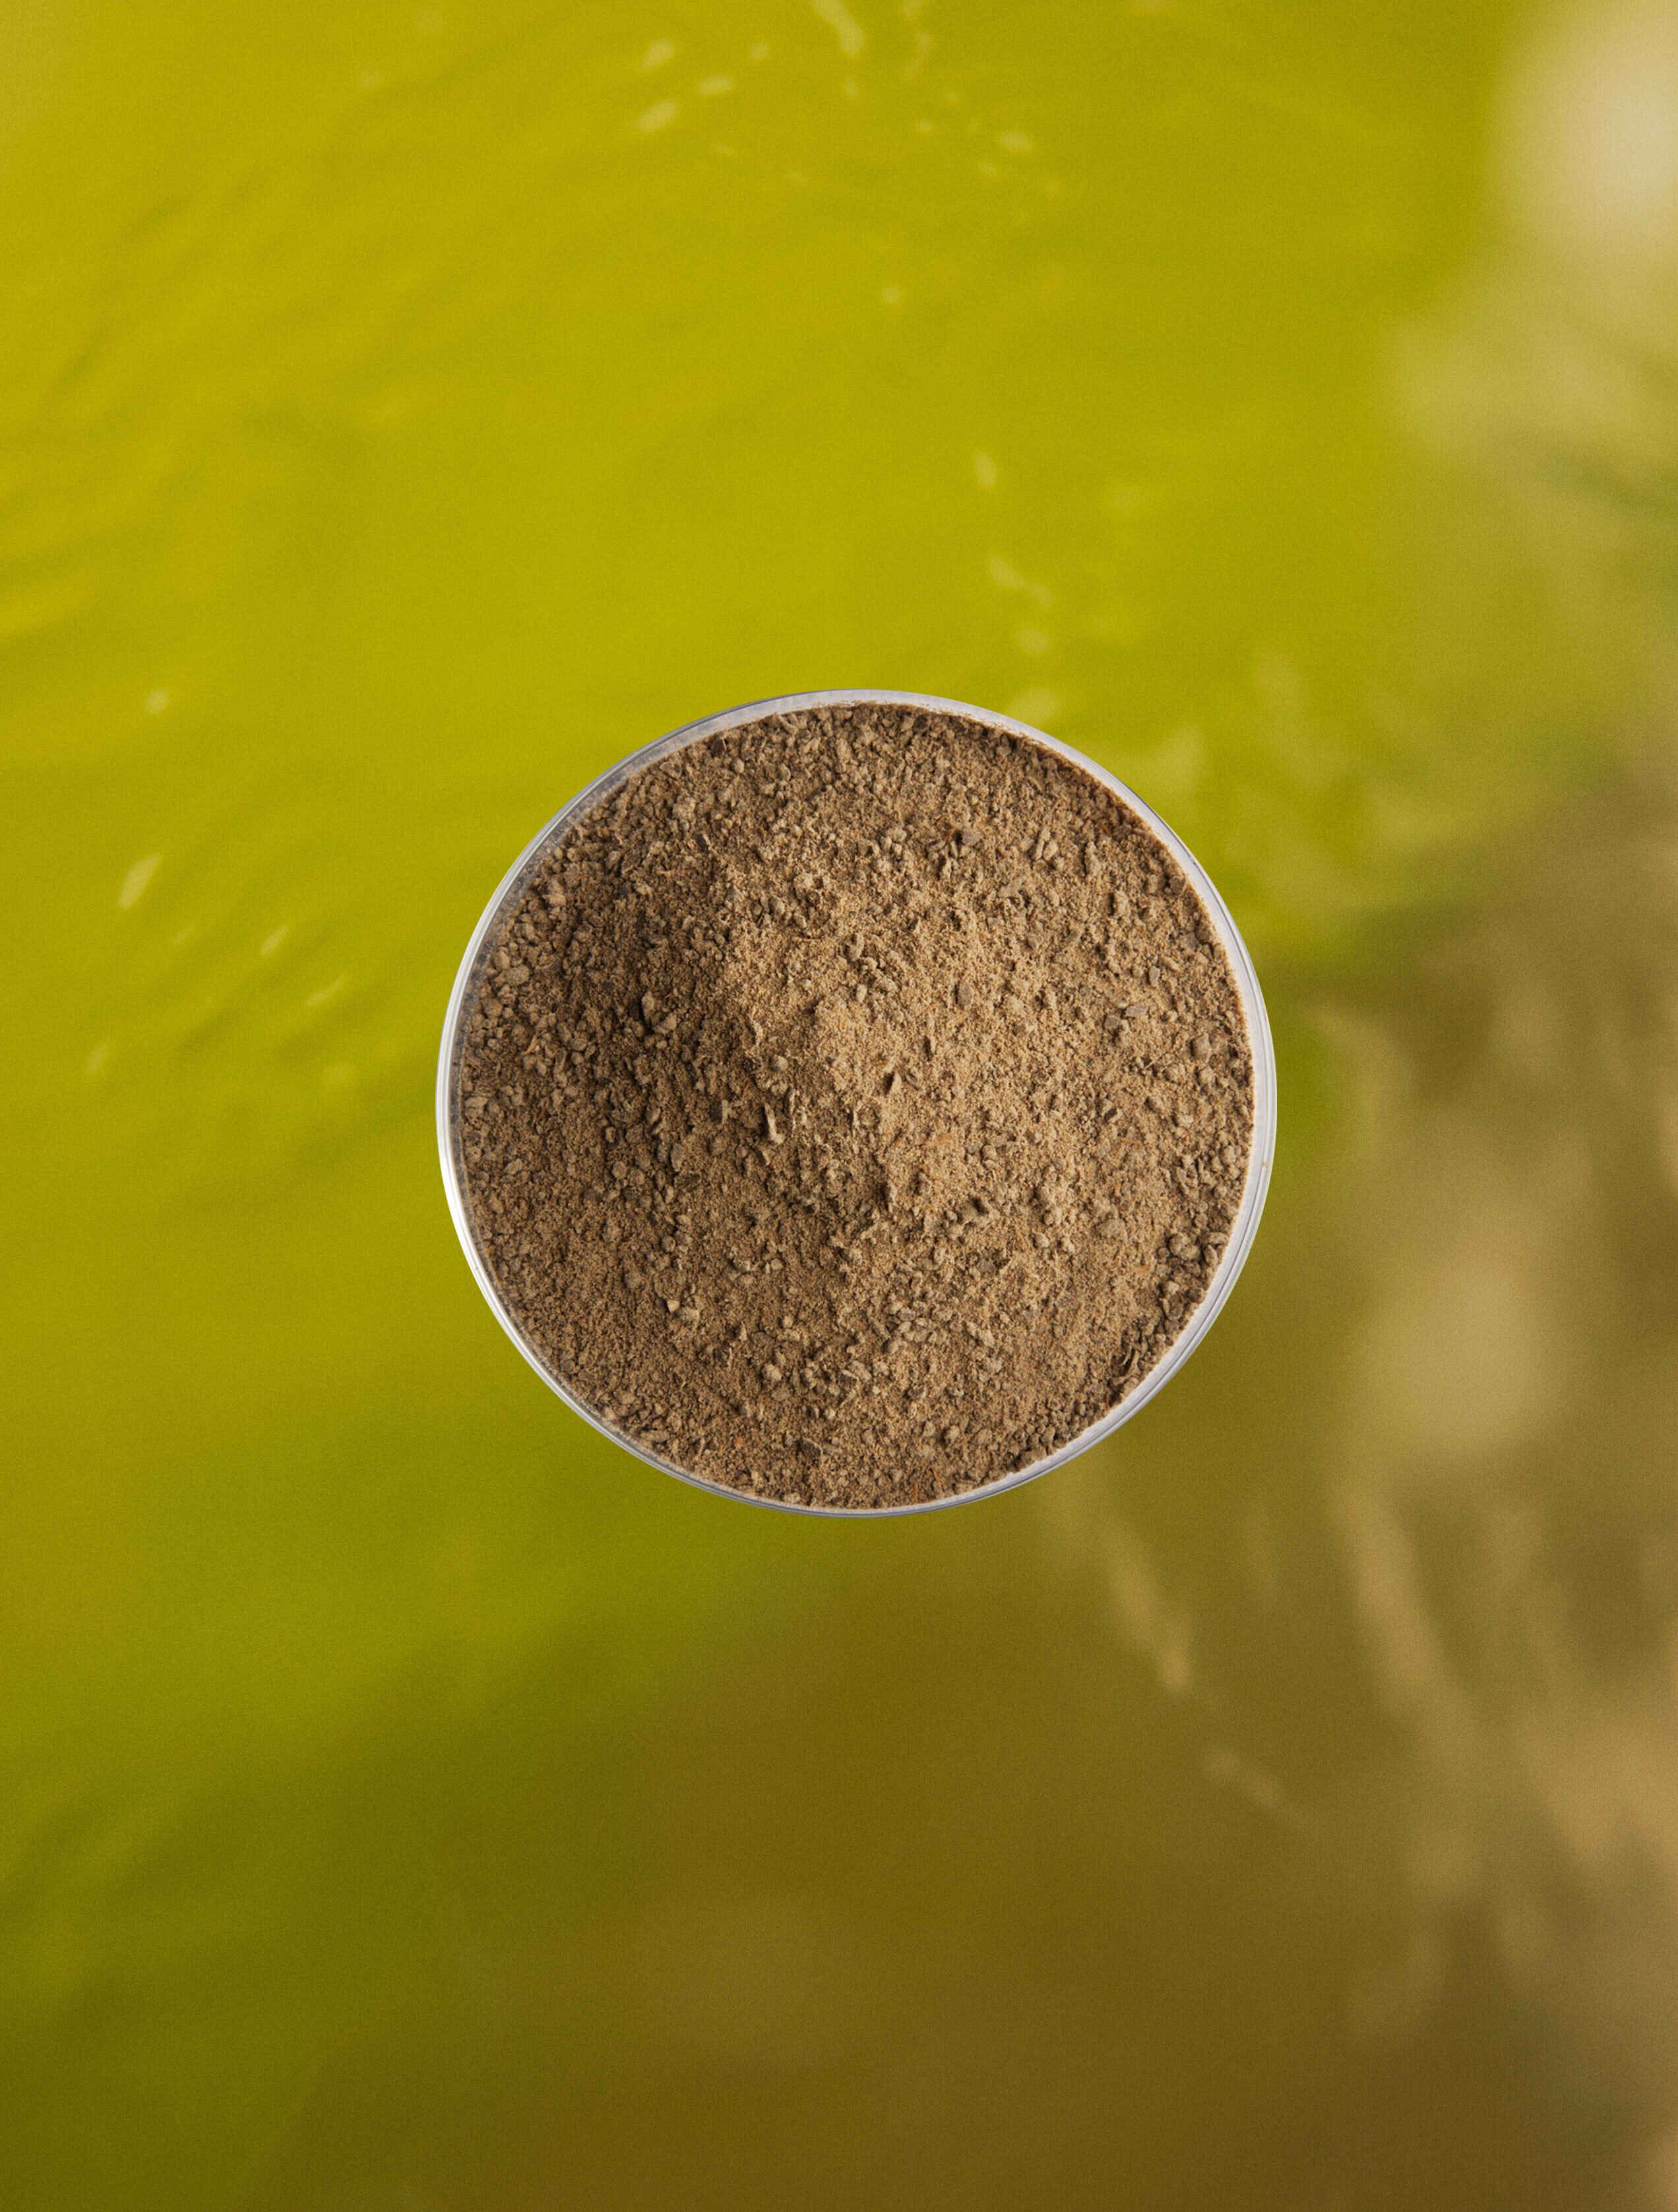 Brown grain powder in a petri dish on a green background